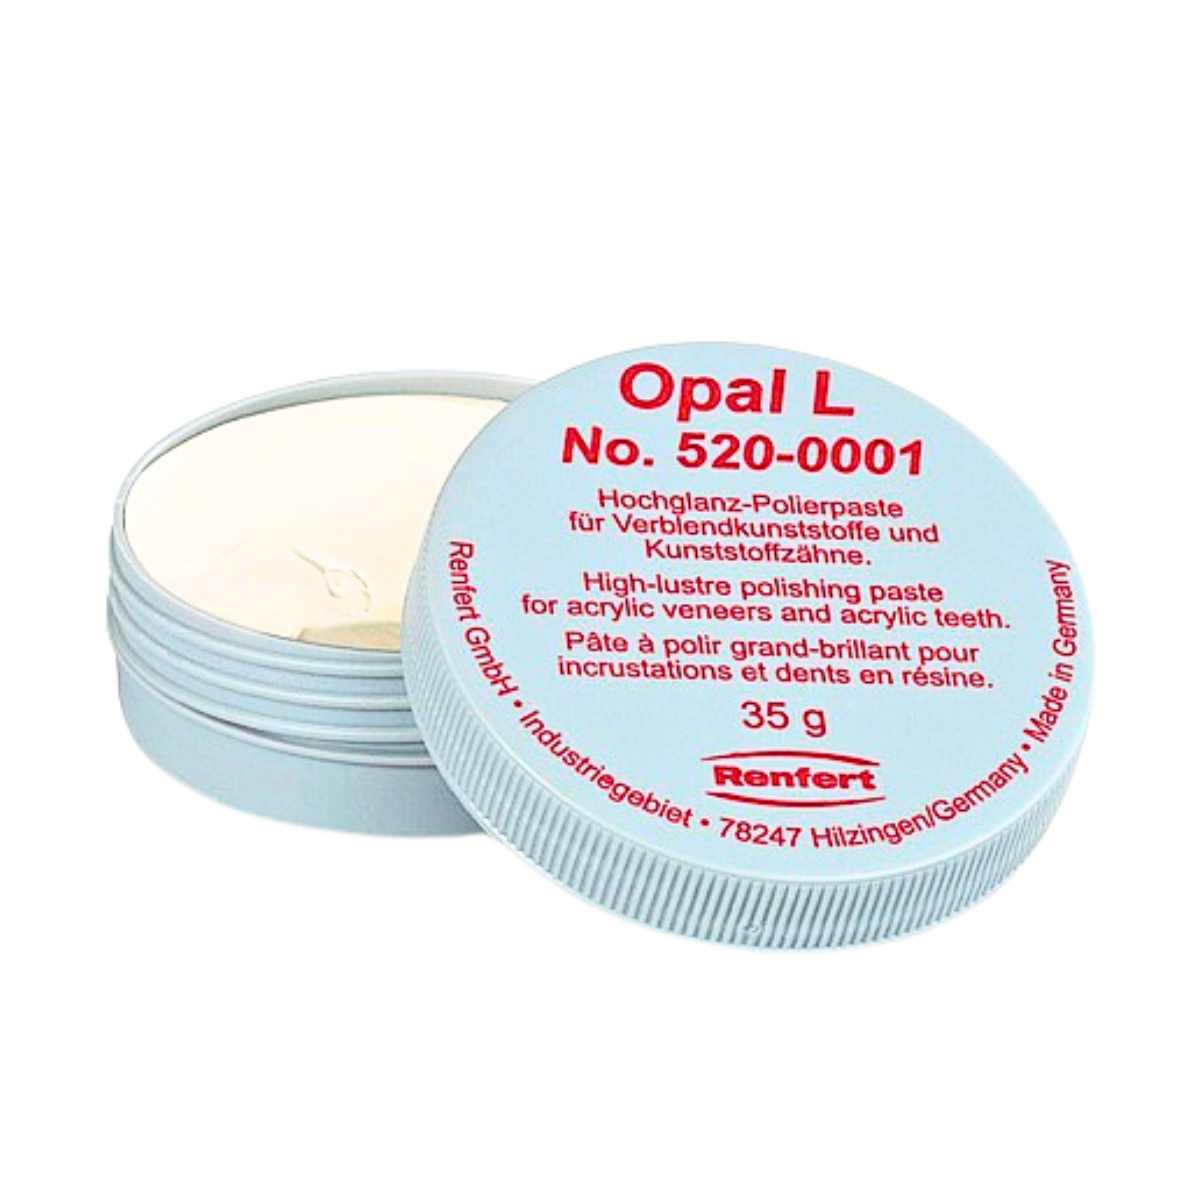 Renfert Opal L High-Luster Polishing Paste 36g